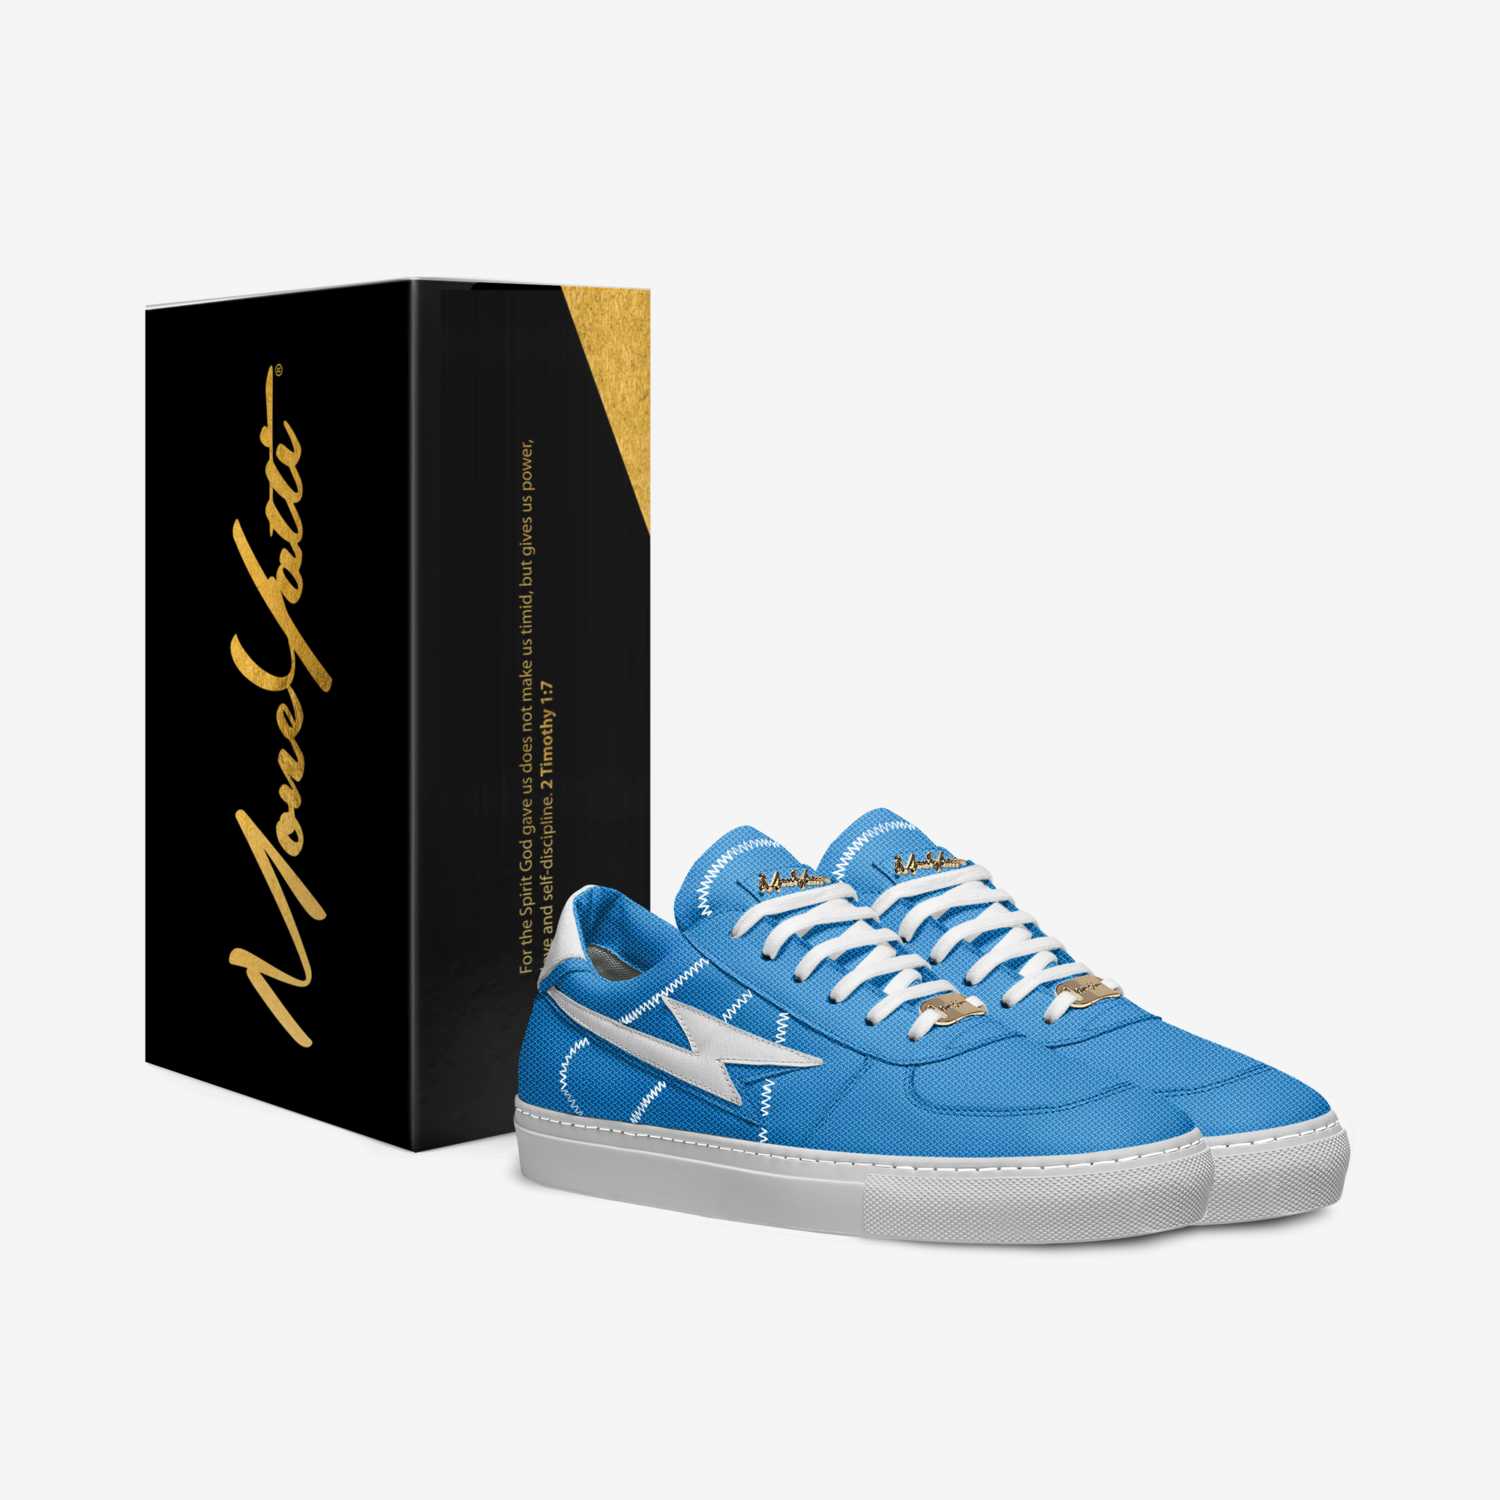 MONEYATTI REBLW09 custom made in Italy shoes by Moneyatti Brand | Box view